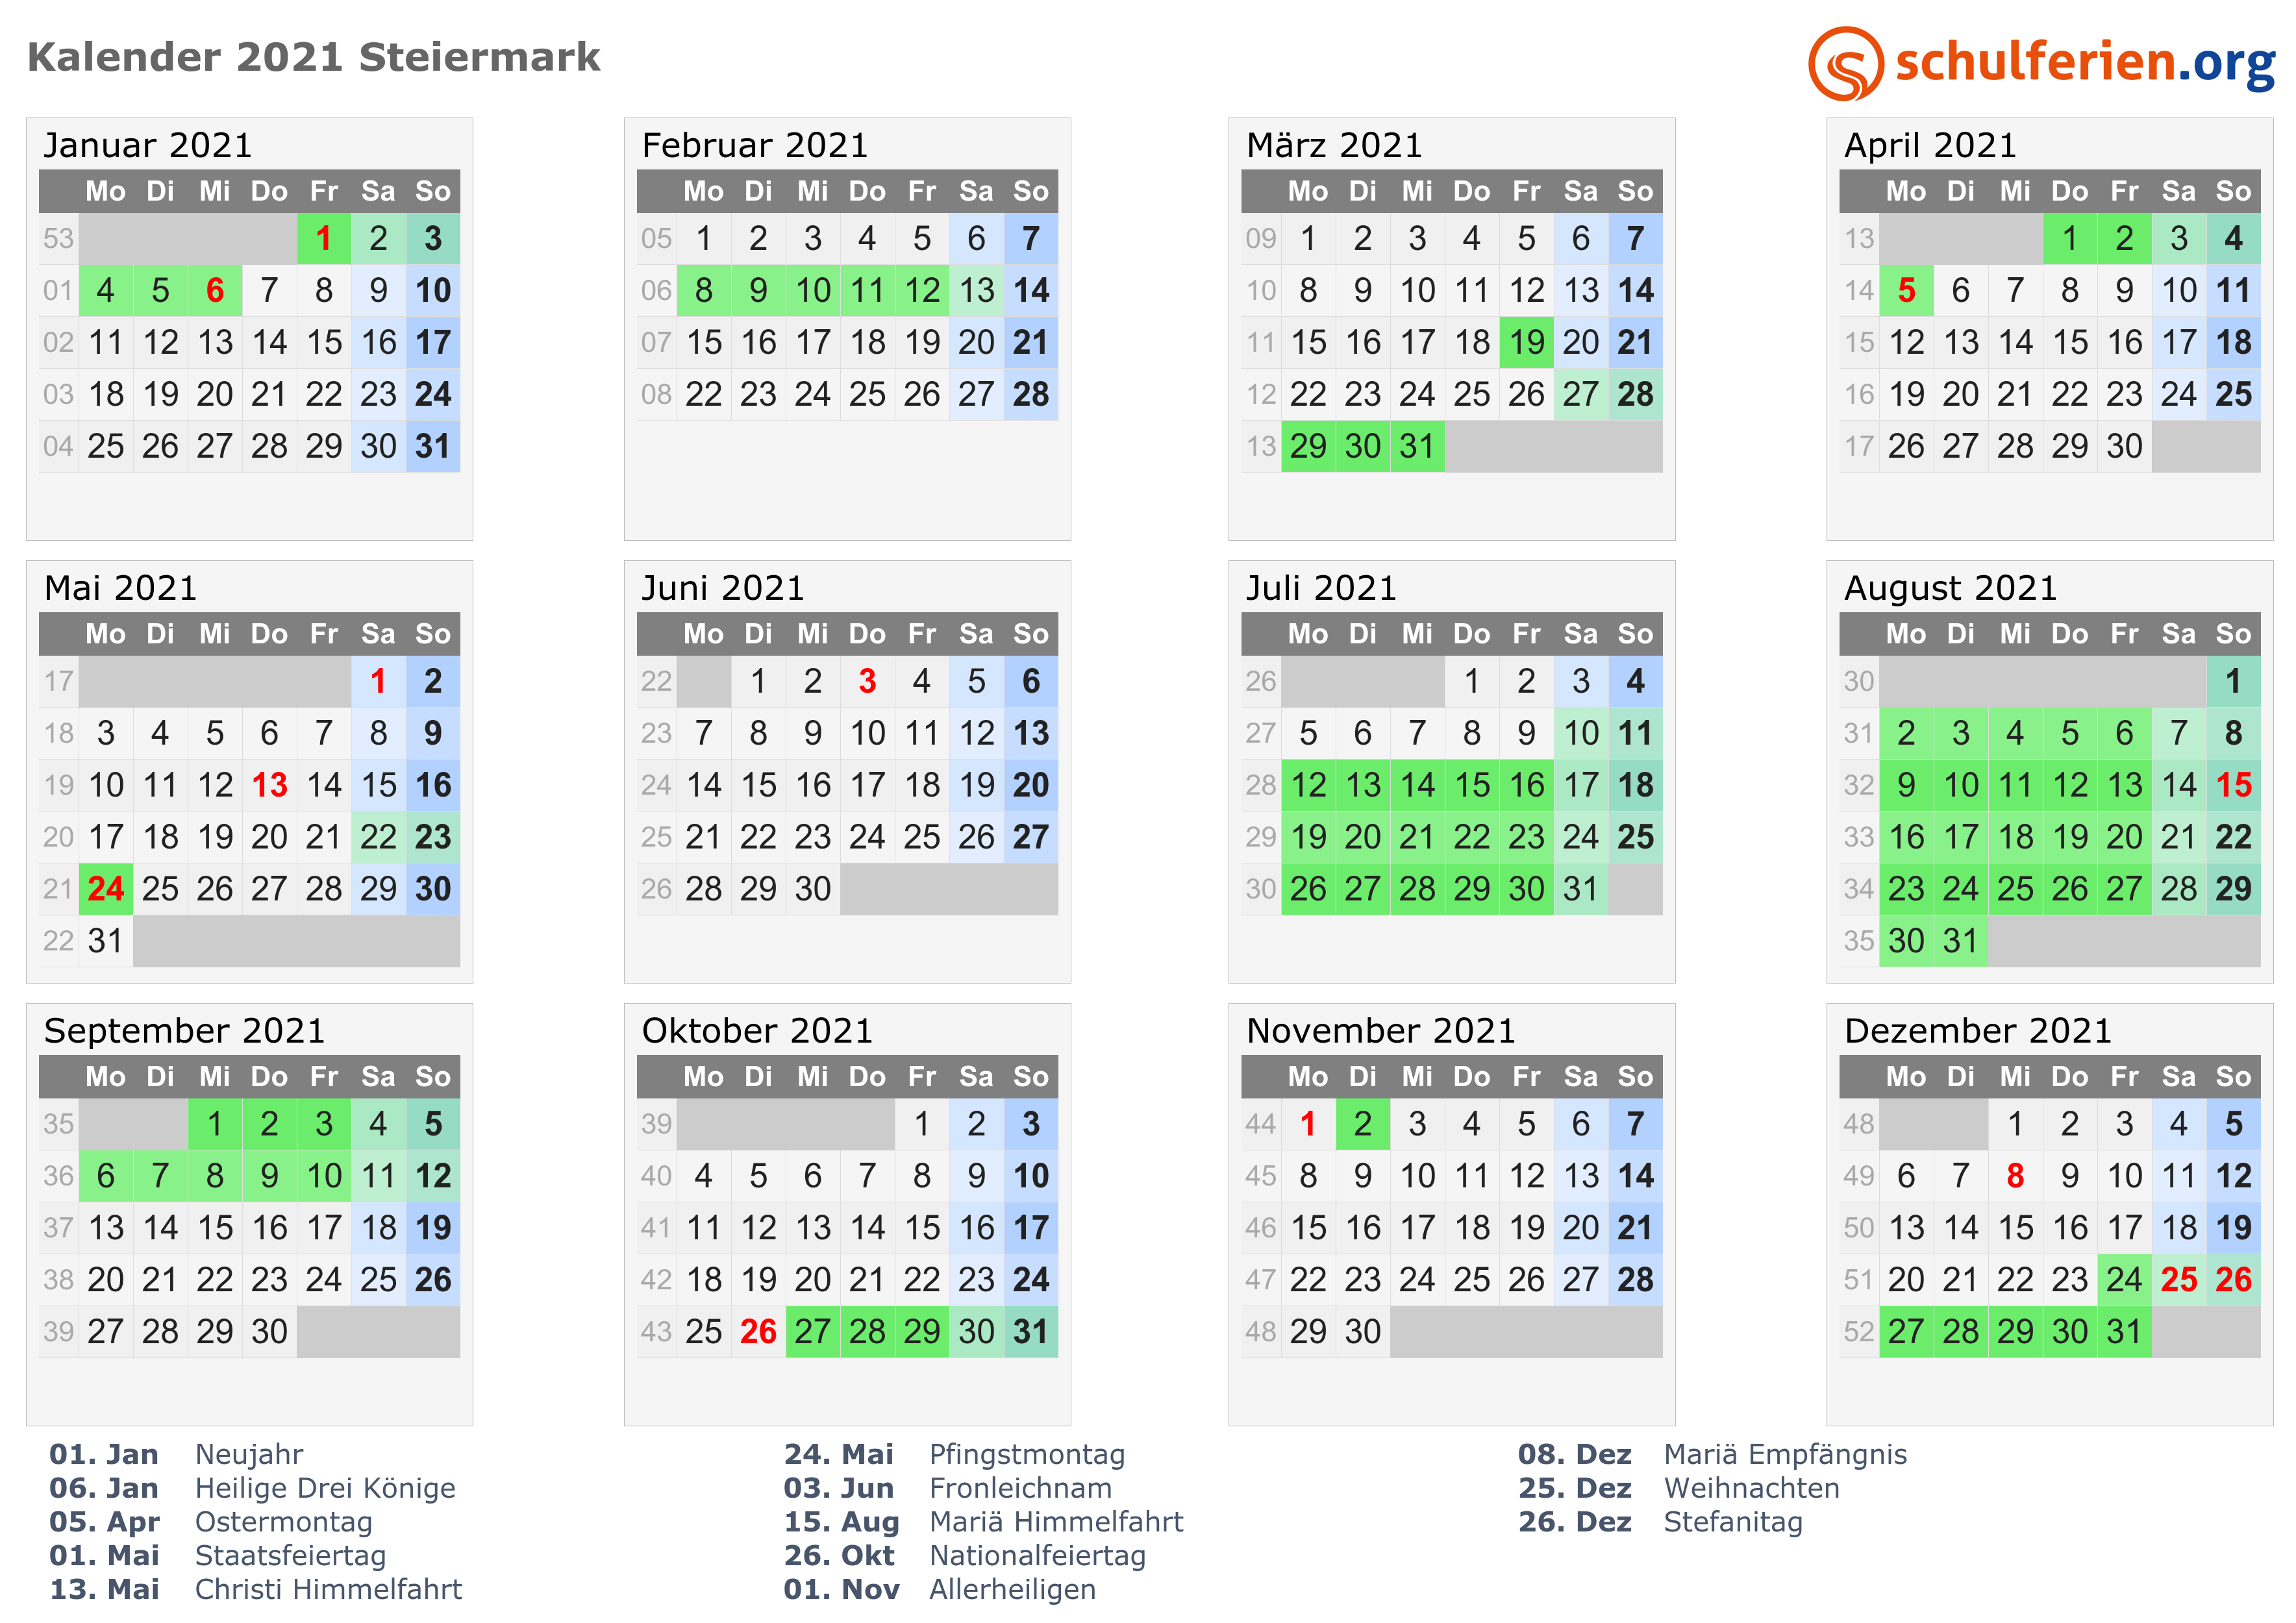 Kalender 2021 Steiermark